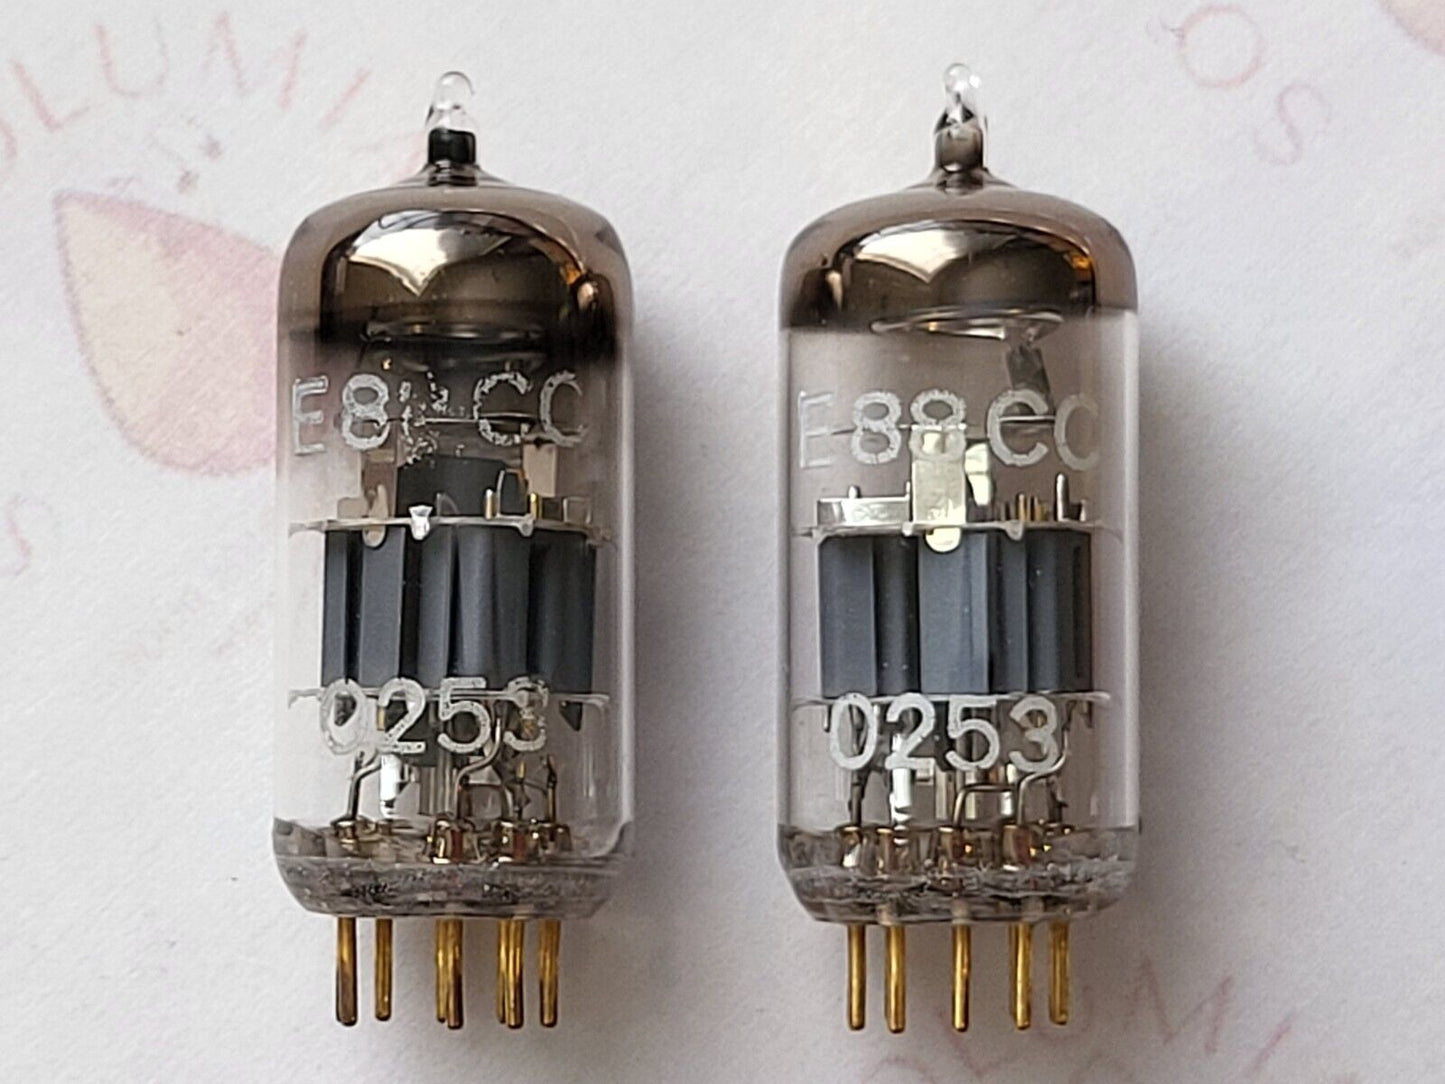 Telefunken E88CC 6922 Matched Pair - Pre-Production ◇ Base - Same Code 0253 -NOS